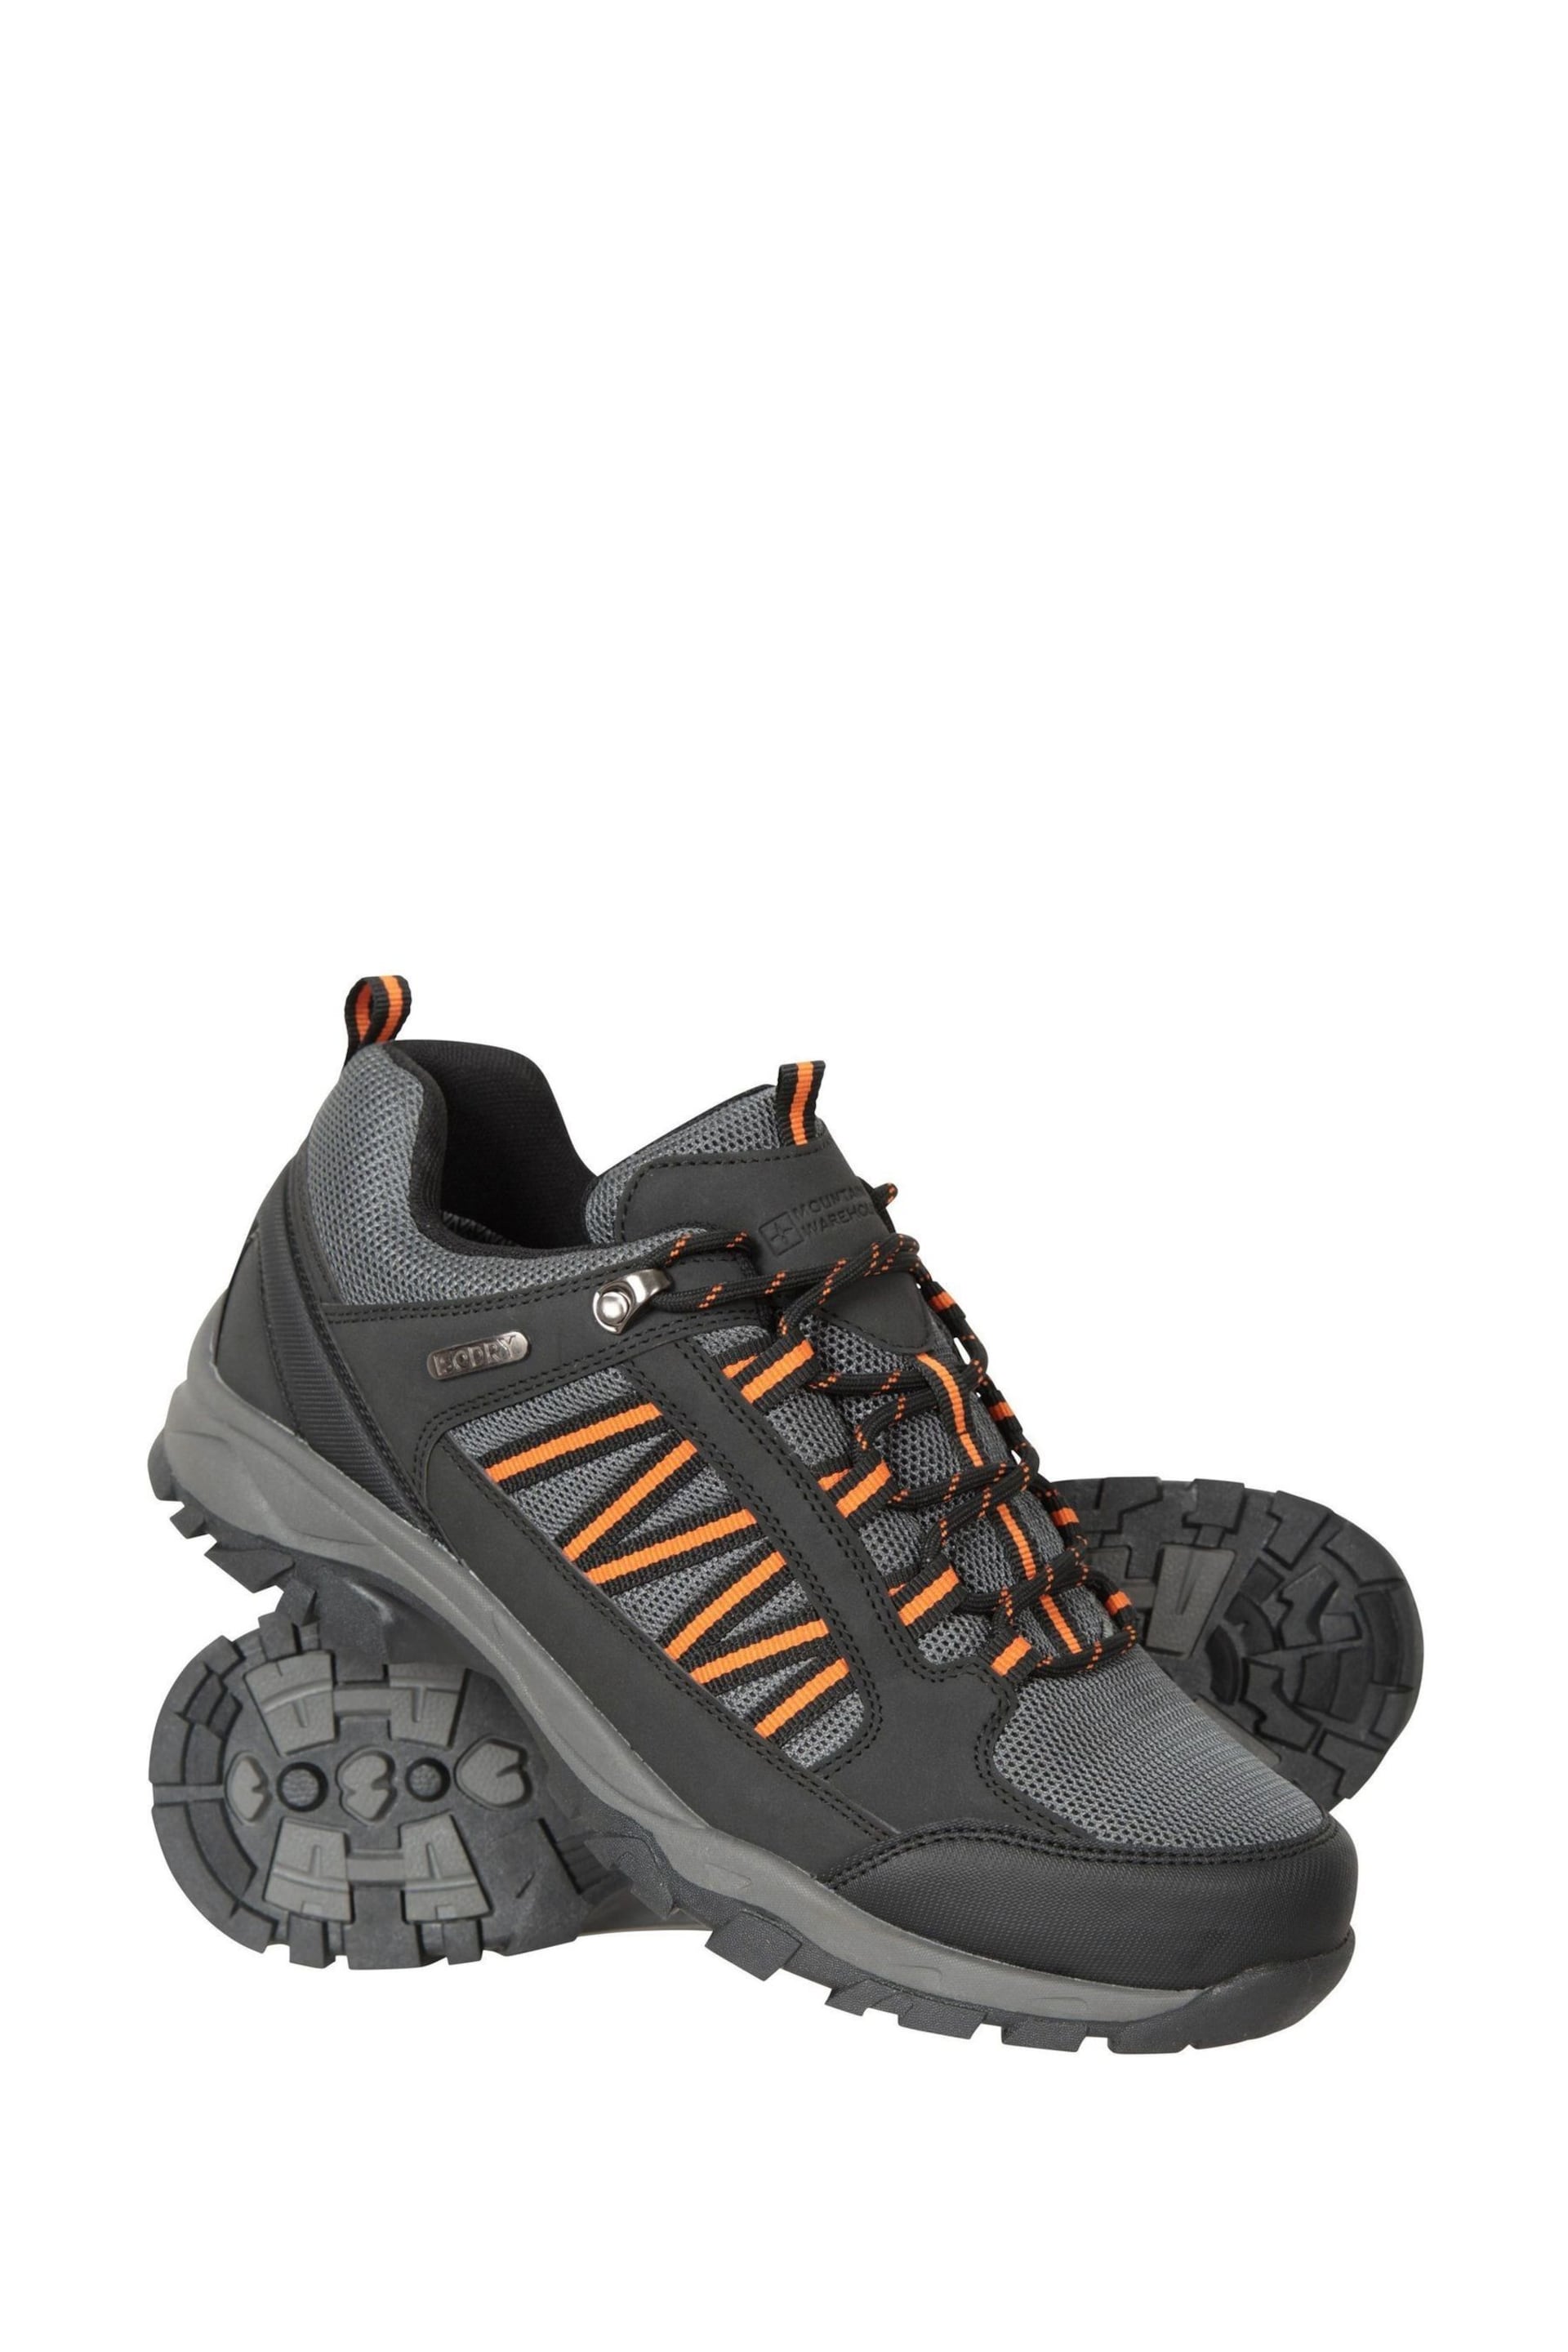 Mountain Warehouse Black Mens Path Waterproof Outdoor Walking Shoes - Image 3 of 6